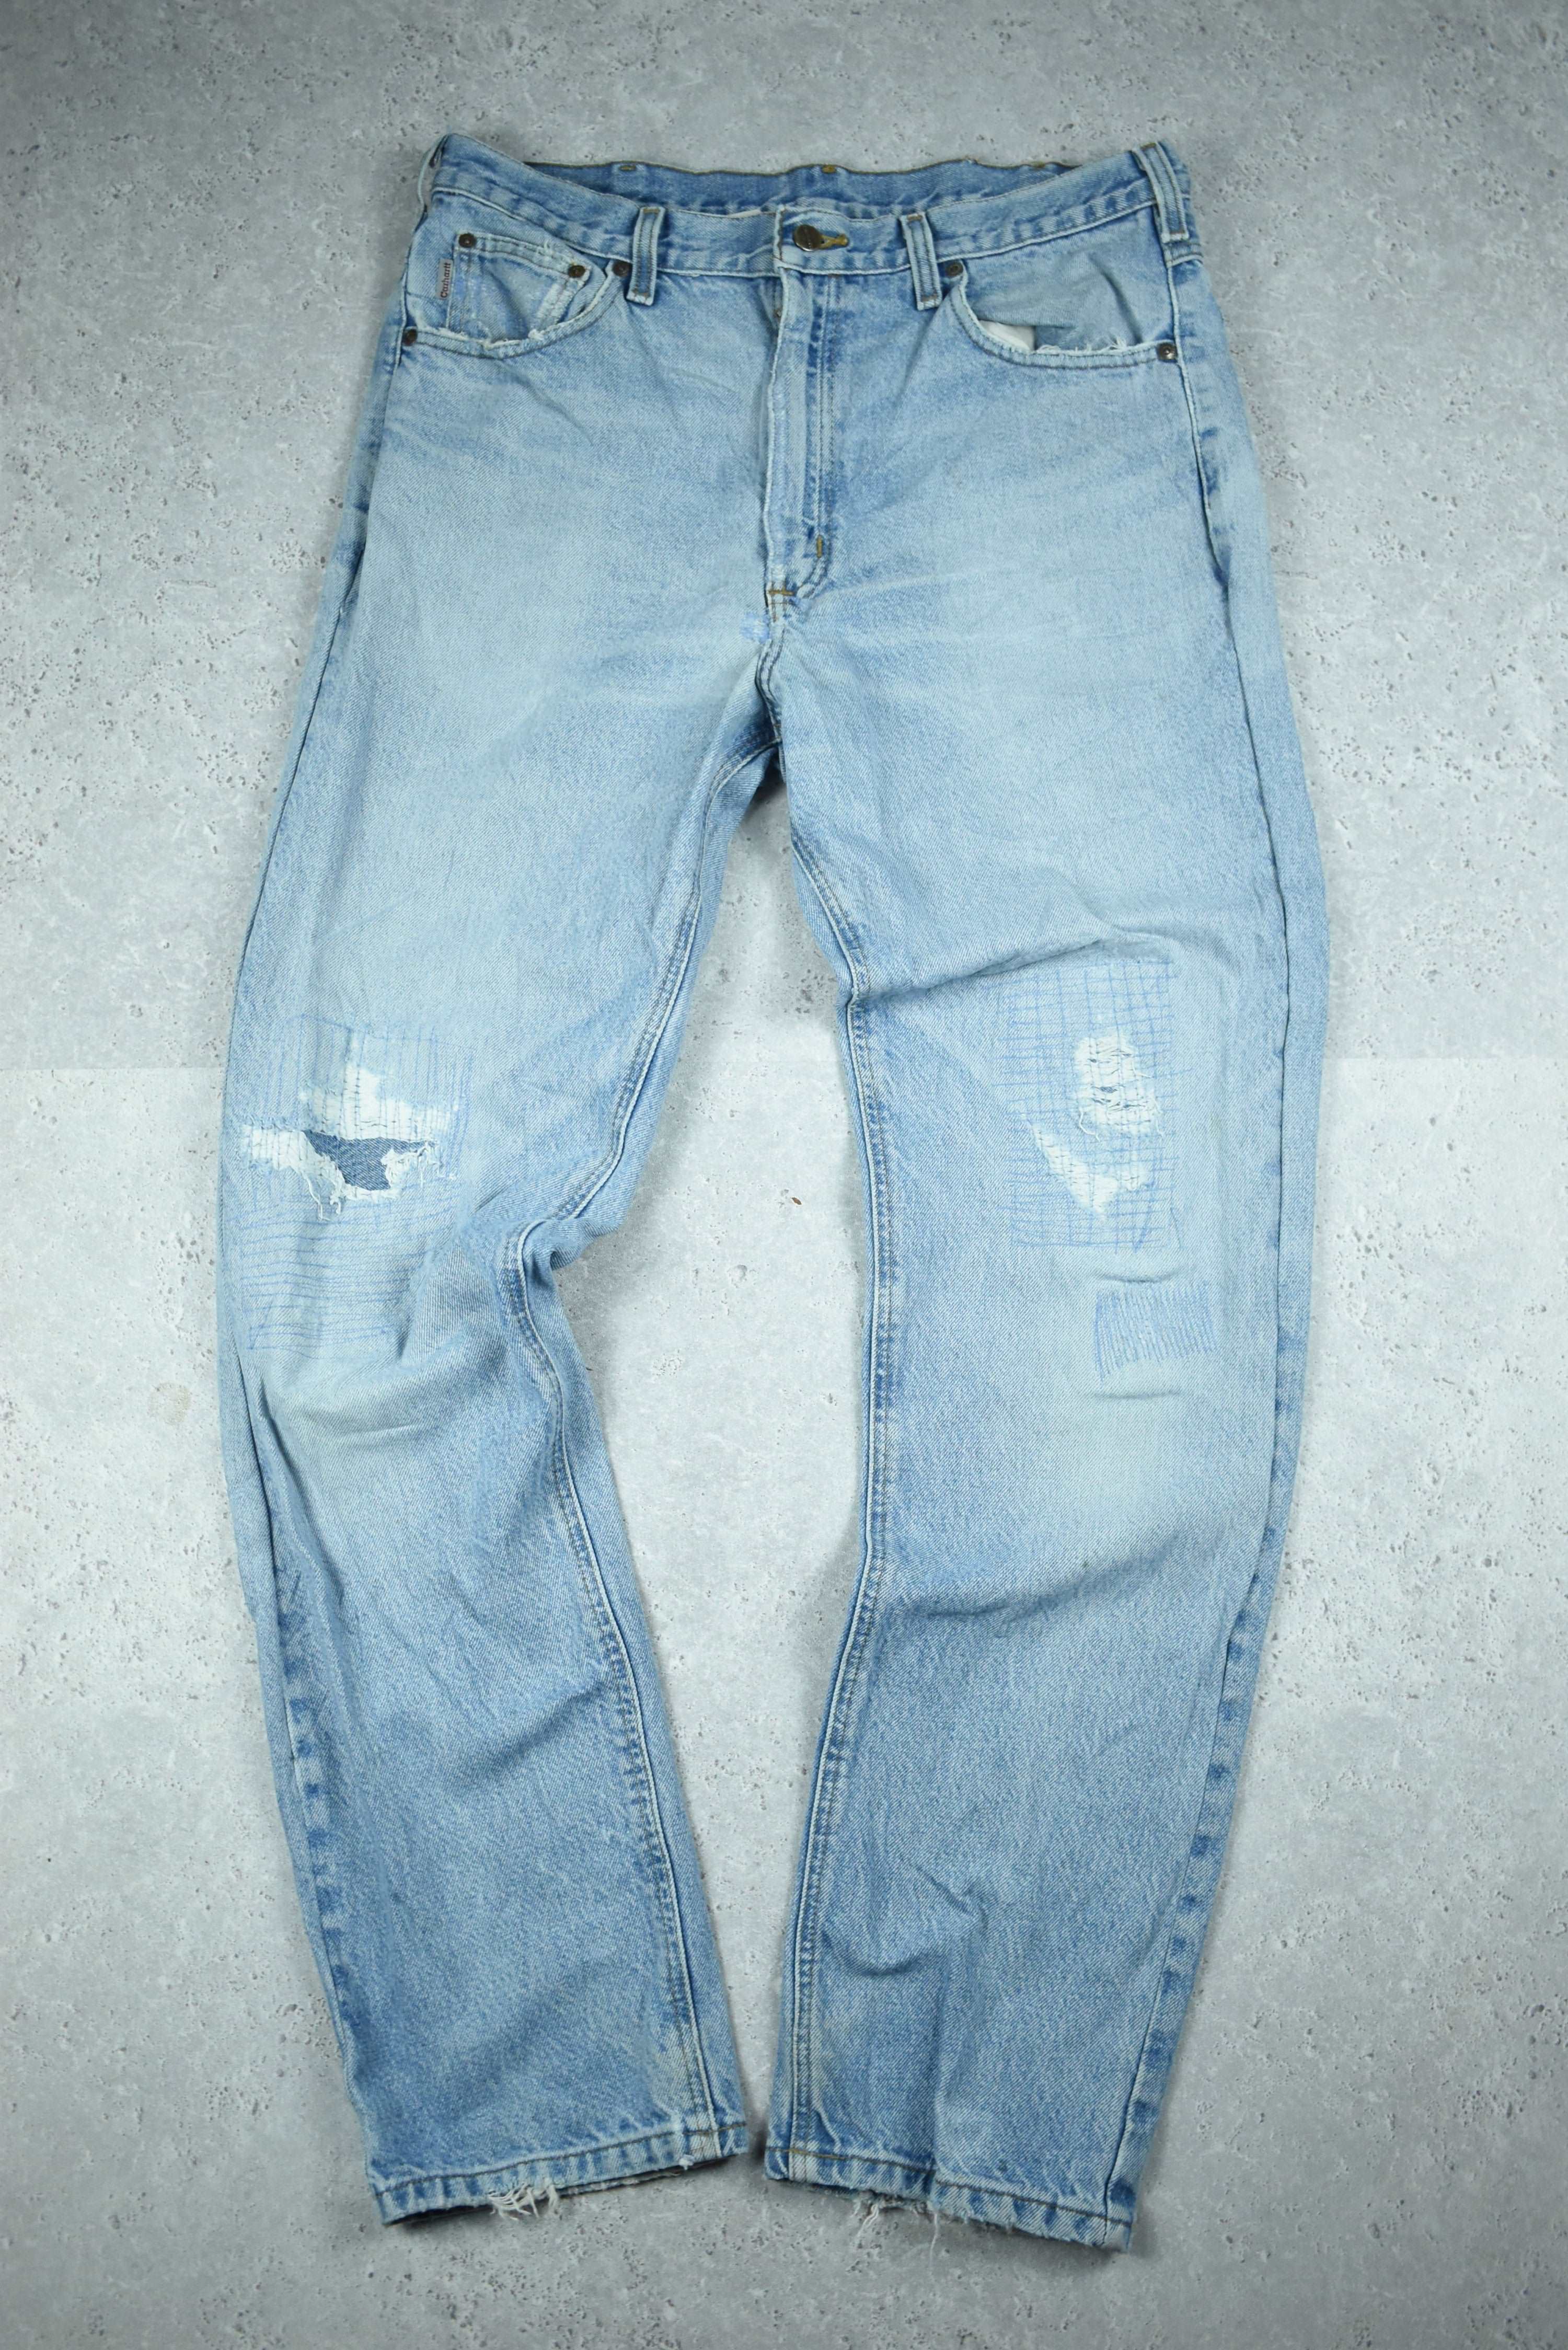 Vintage Carhartt Denim Jeans 36x30